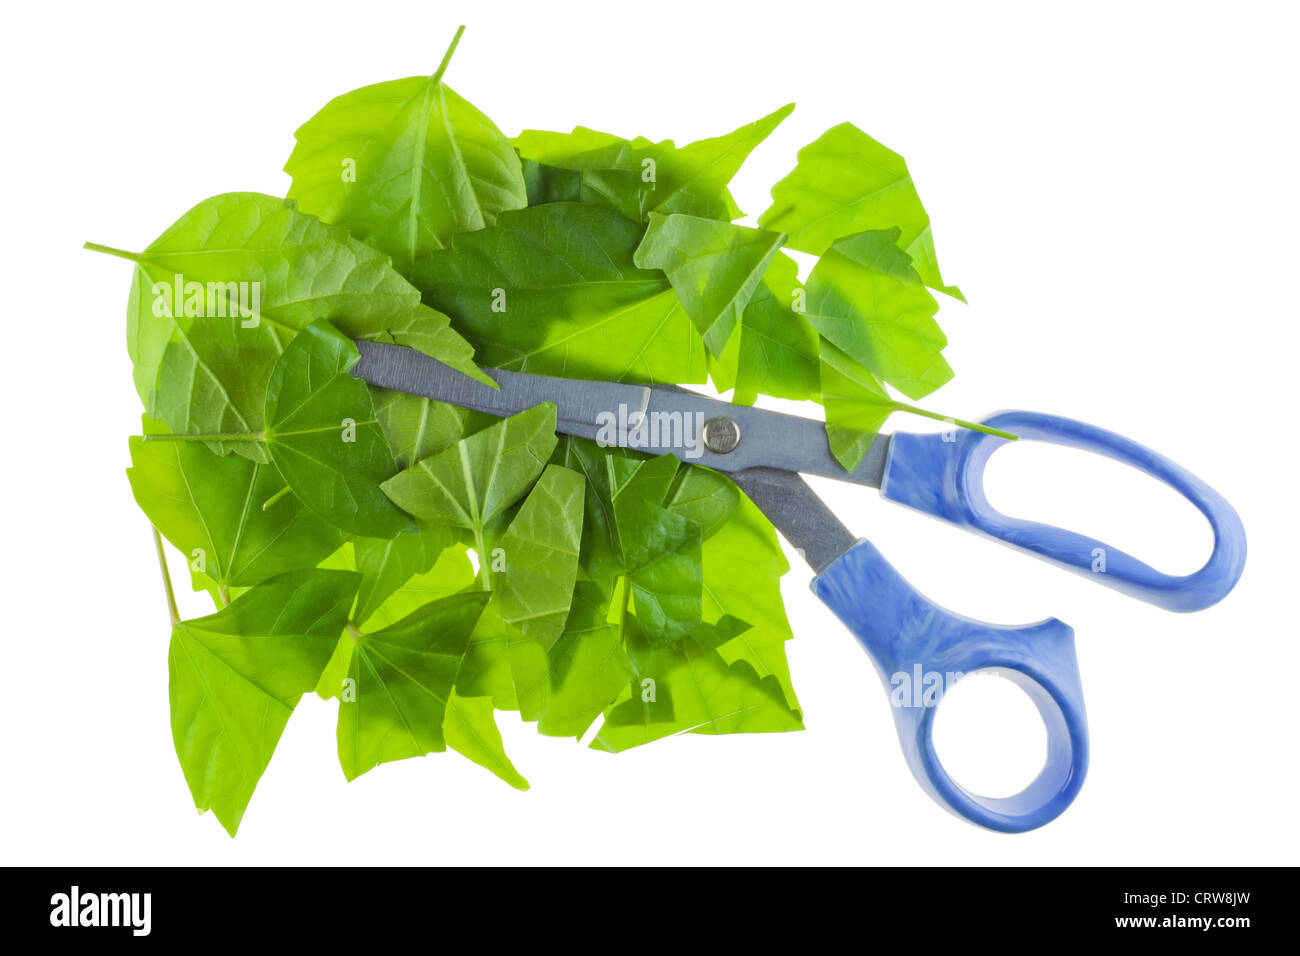 Scissors cut green leaves Stock Photo